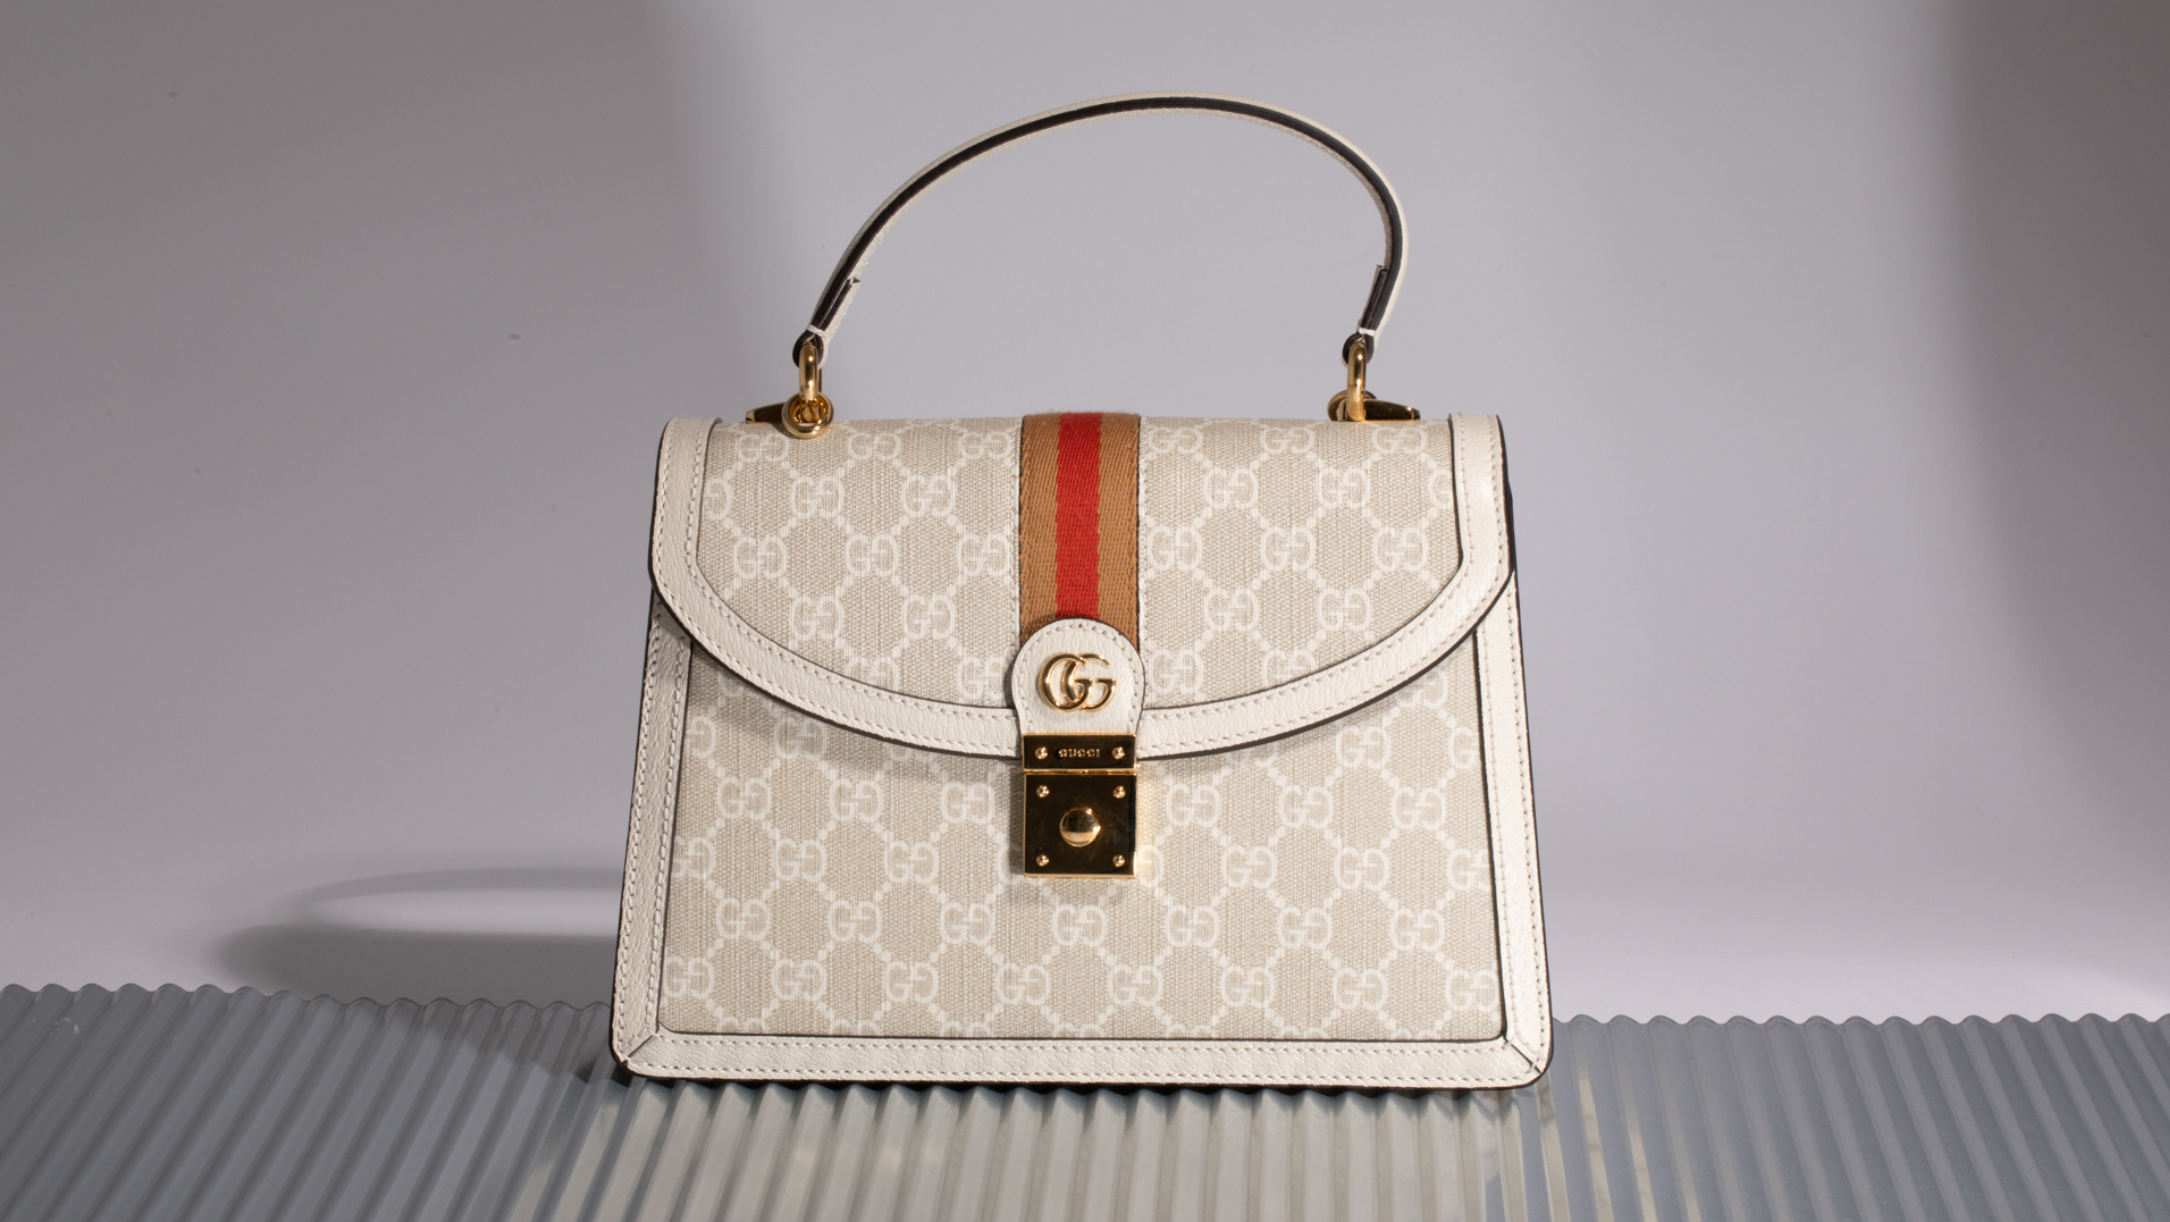 GENUINE RED GUCCI Handbag with Classic GG Monogram Pattern £200.00 -  PicClick UK